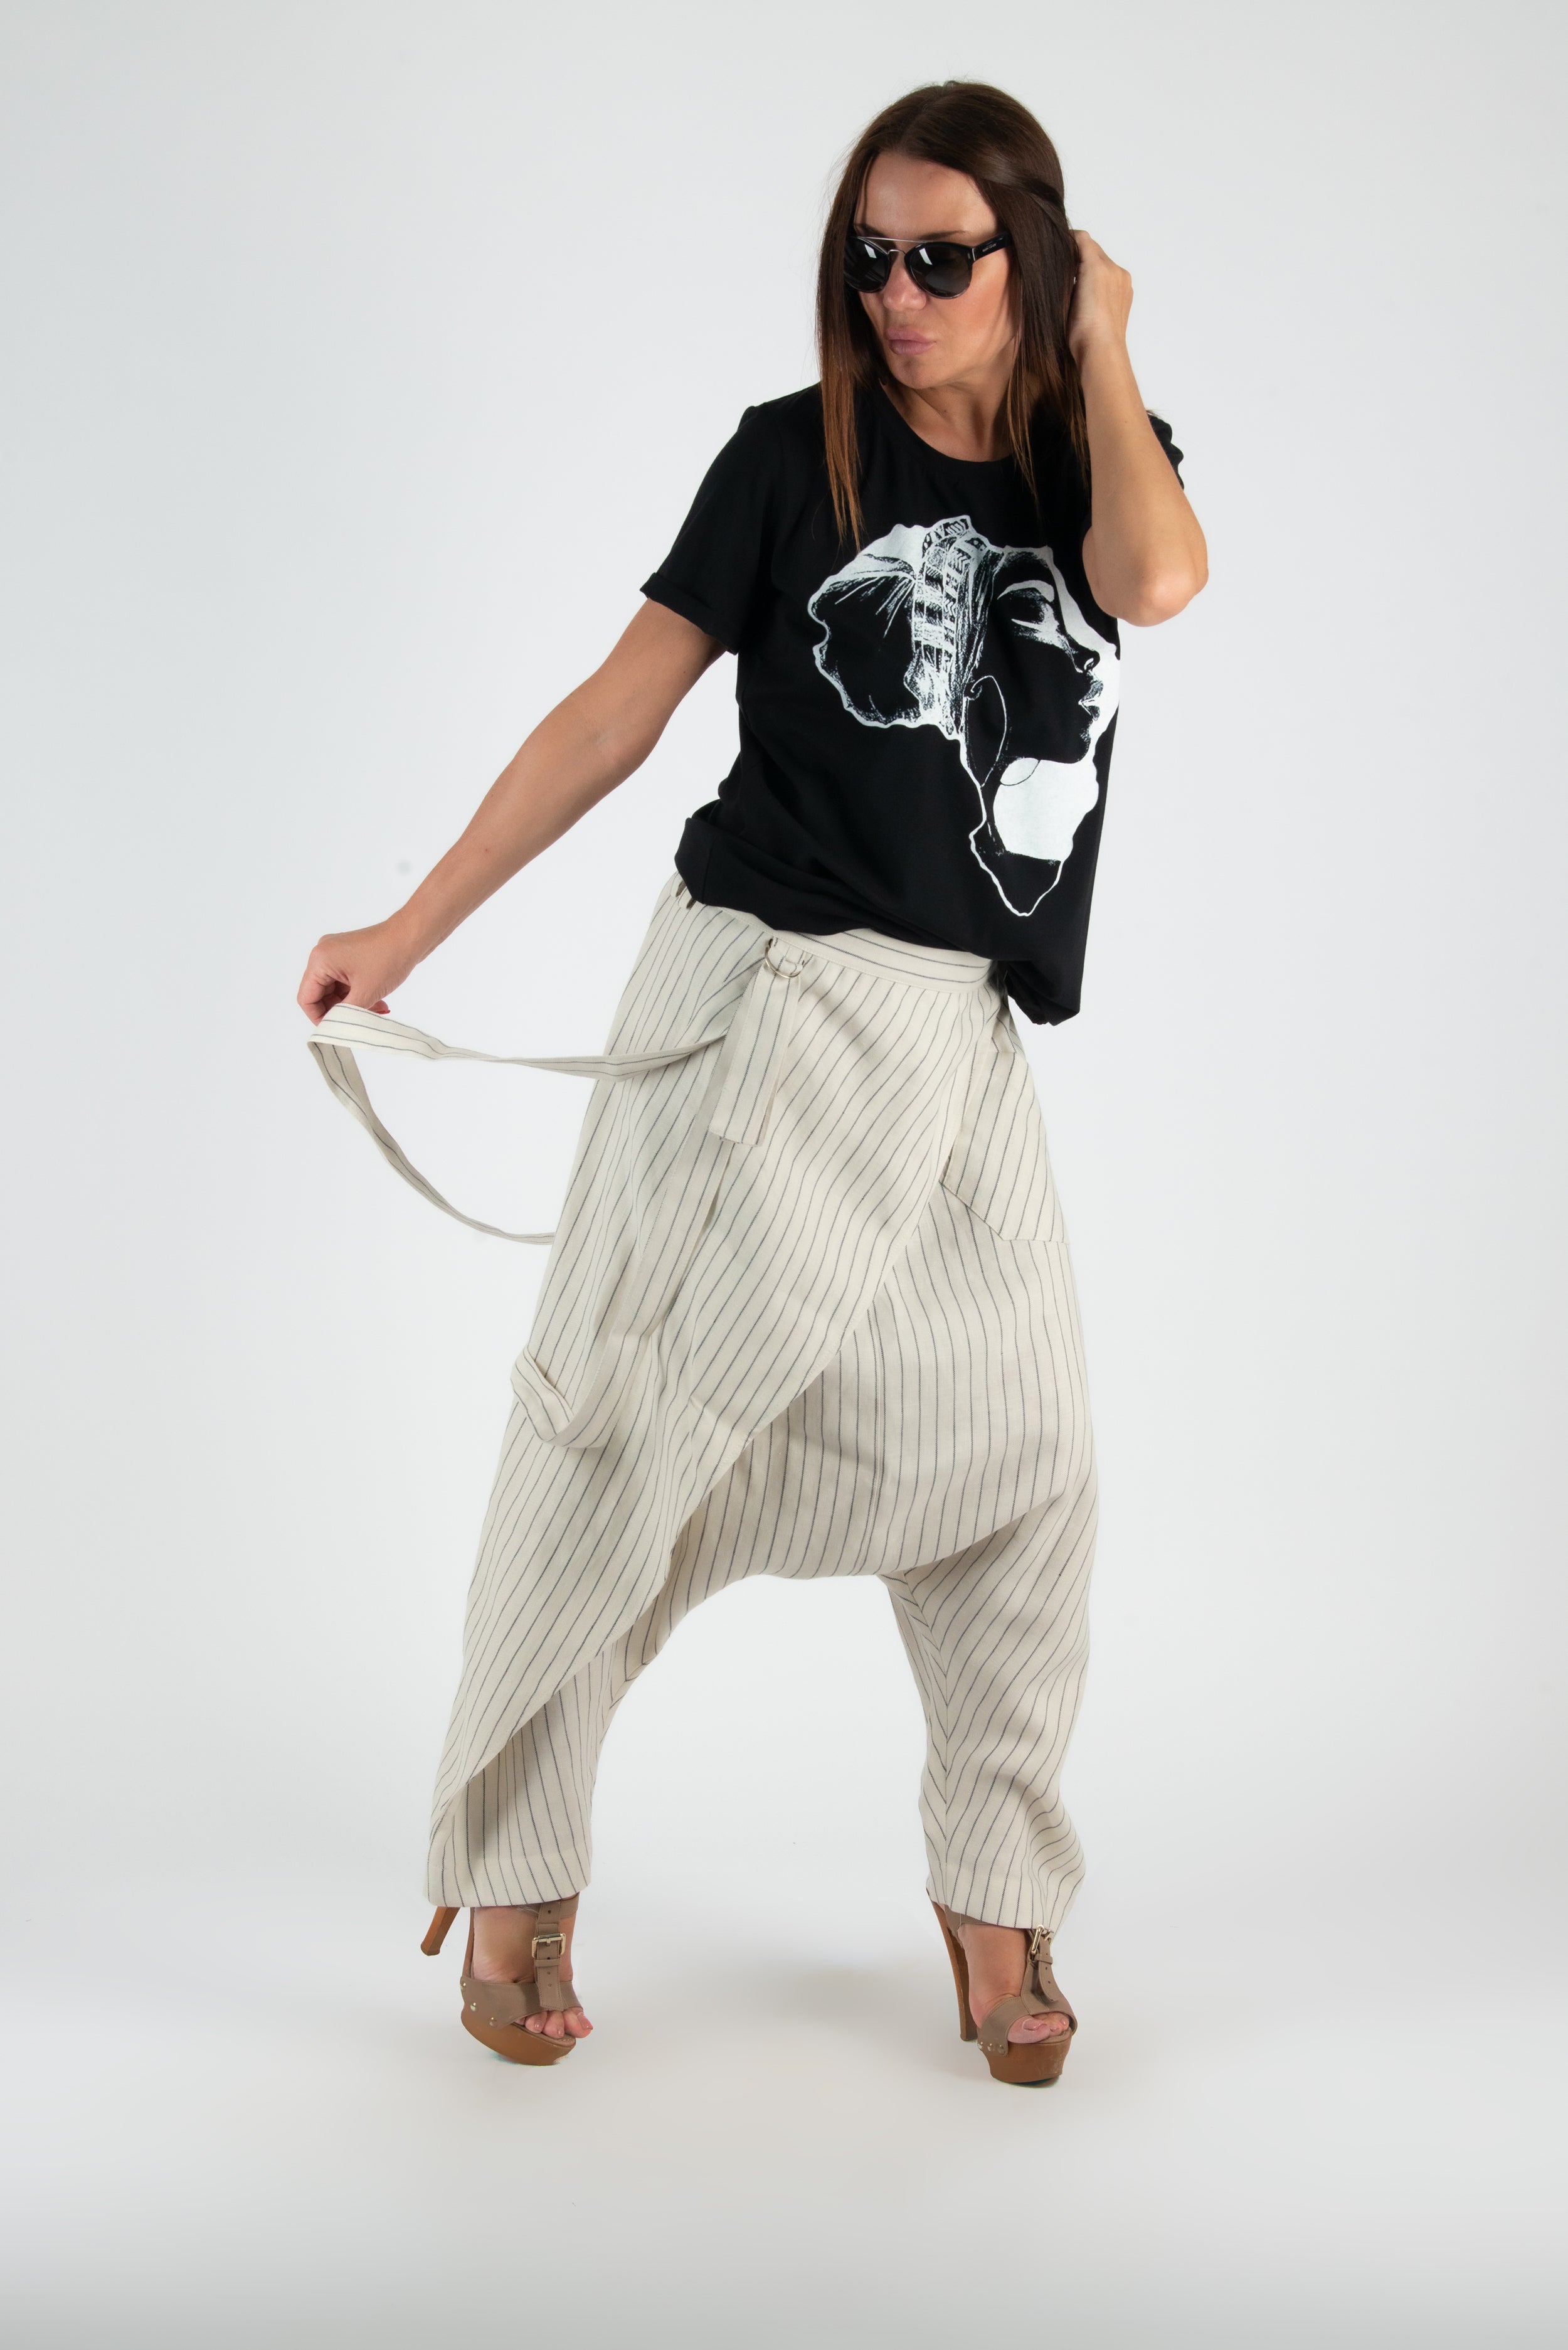 Ivory Linen Drop Crotch Pants by EUG Fashion